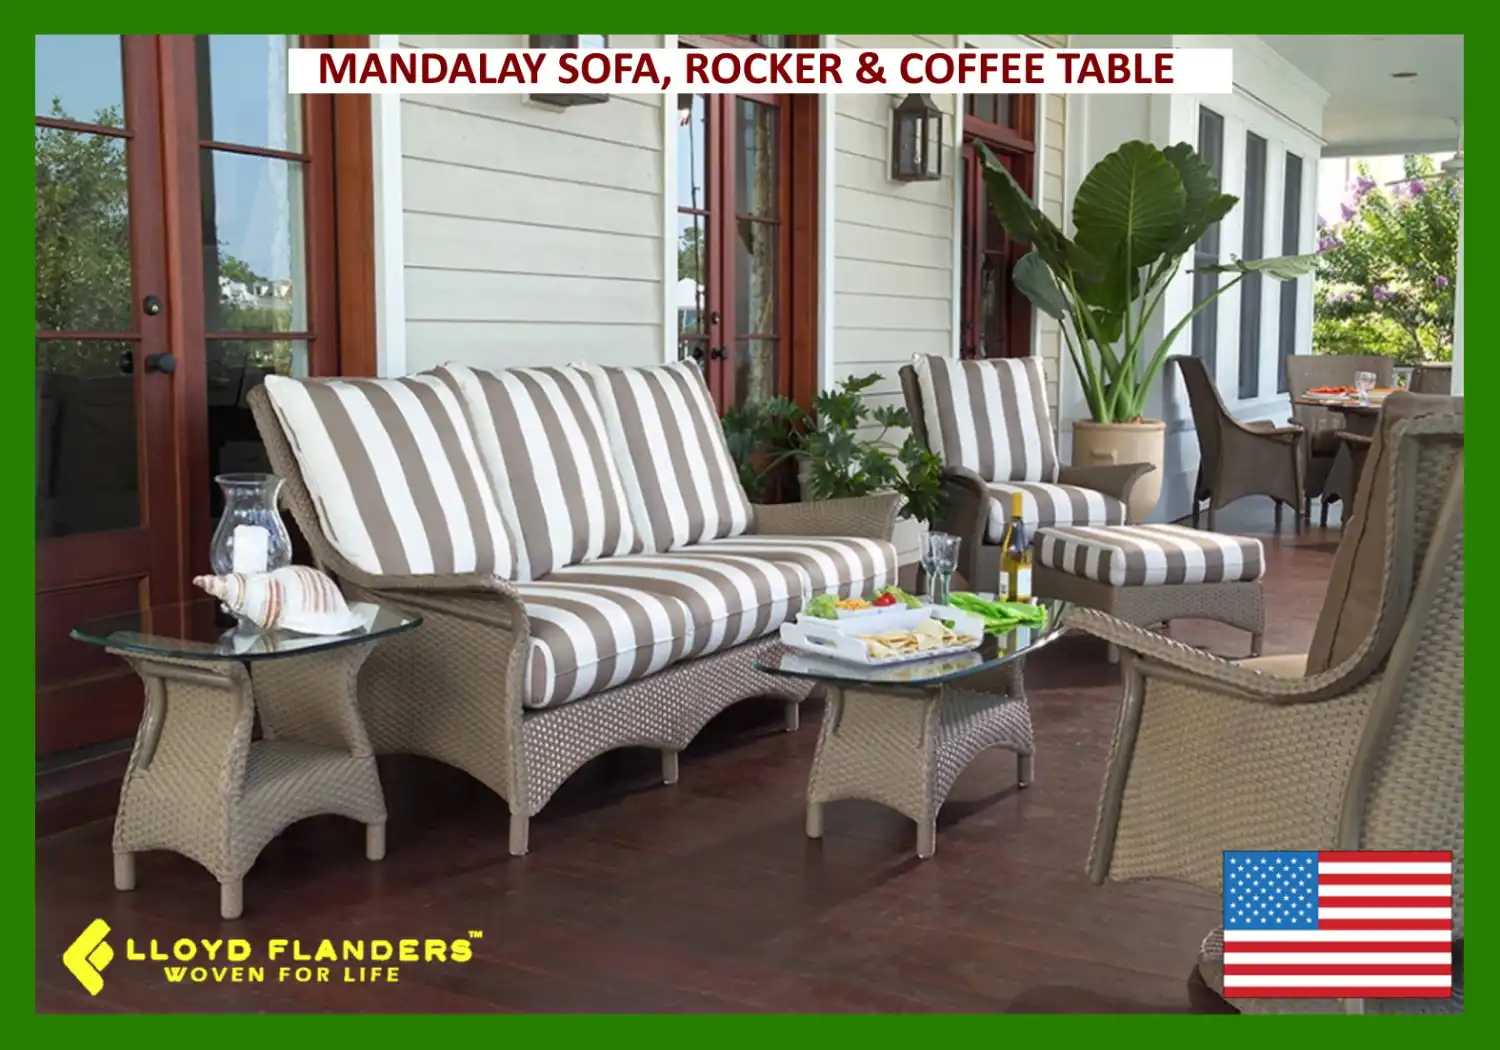 MANDALAY SOFA, ROCKER & COFFEE TABLE